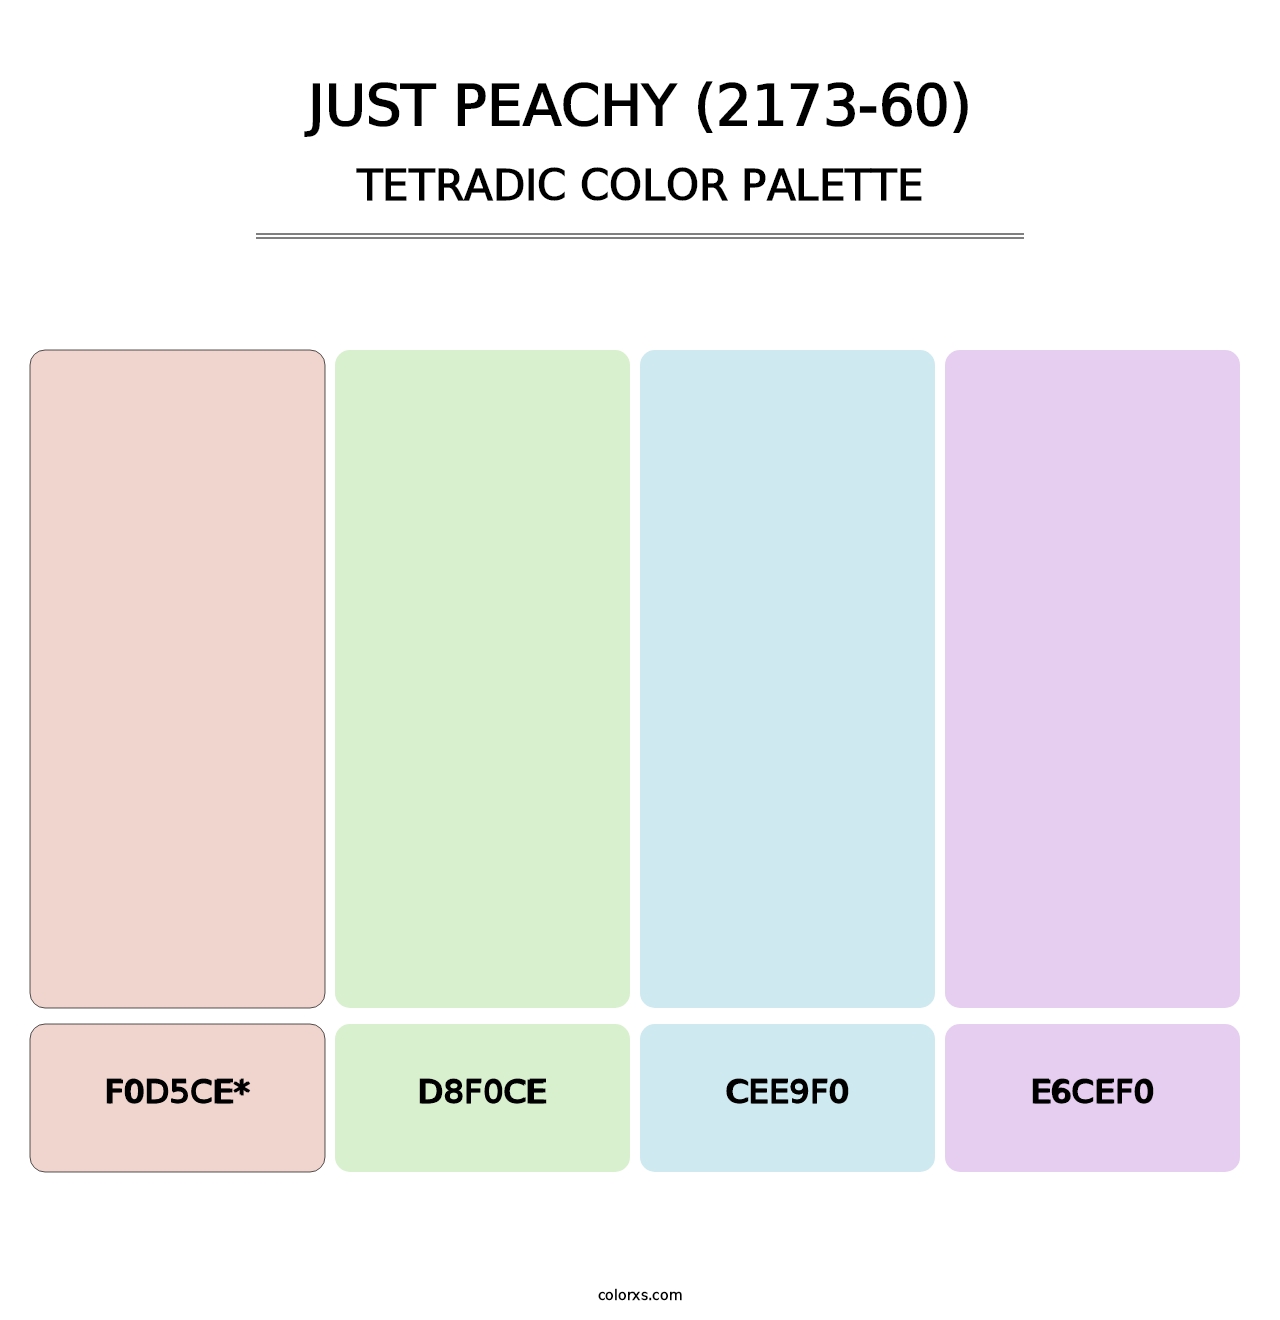 Just Peachy (2173-60) - Tetradic Color Palette